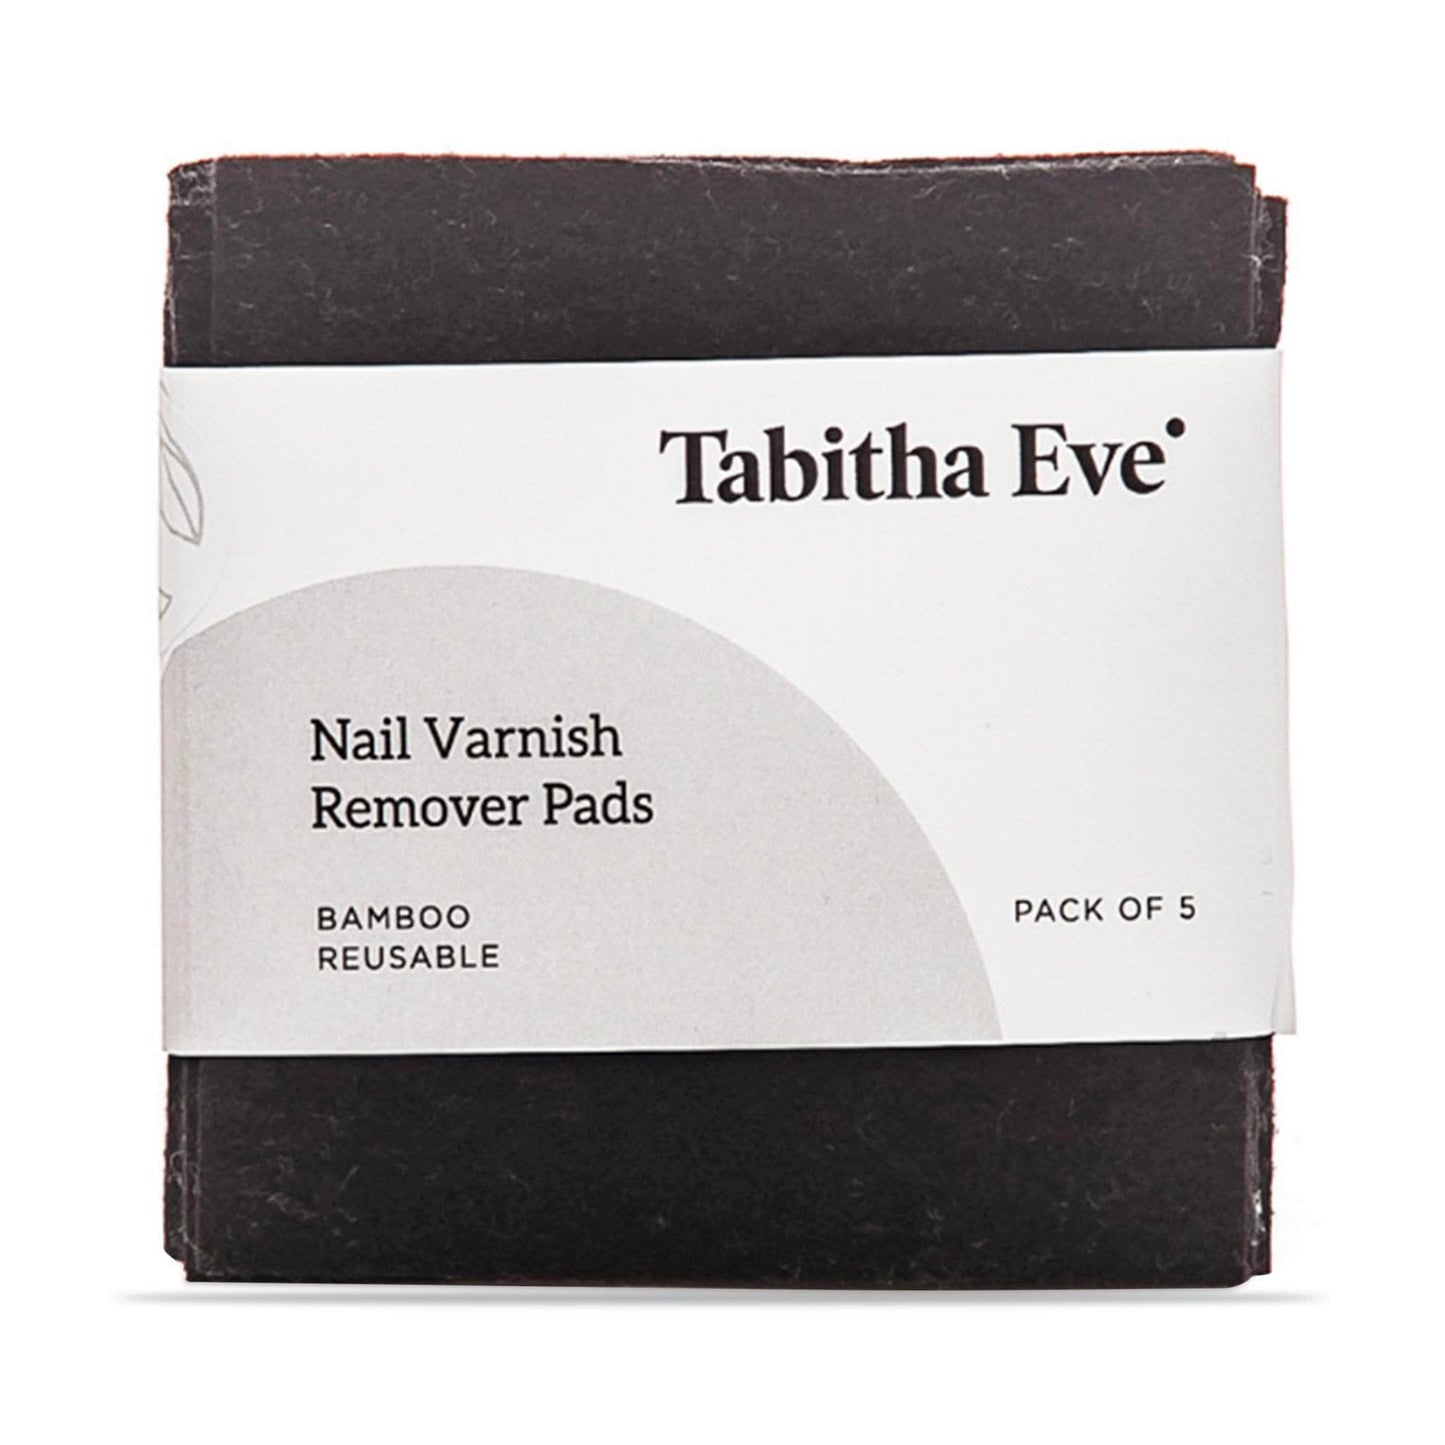 Tabitha Eve Make Up Tabitha Eve - Reusable Nail Varnish Wipes - Pack of 5